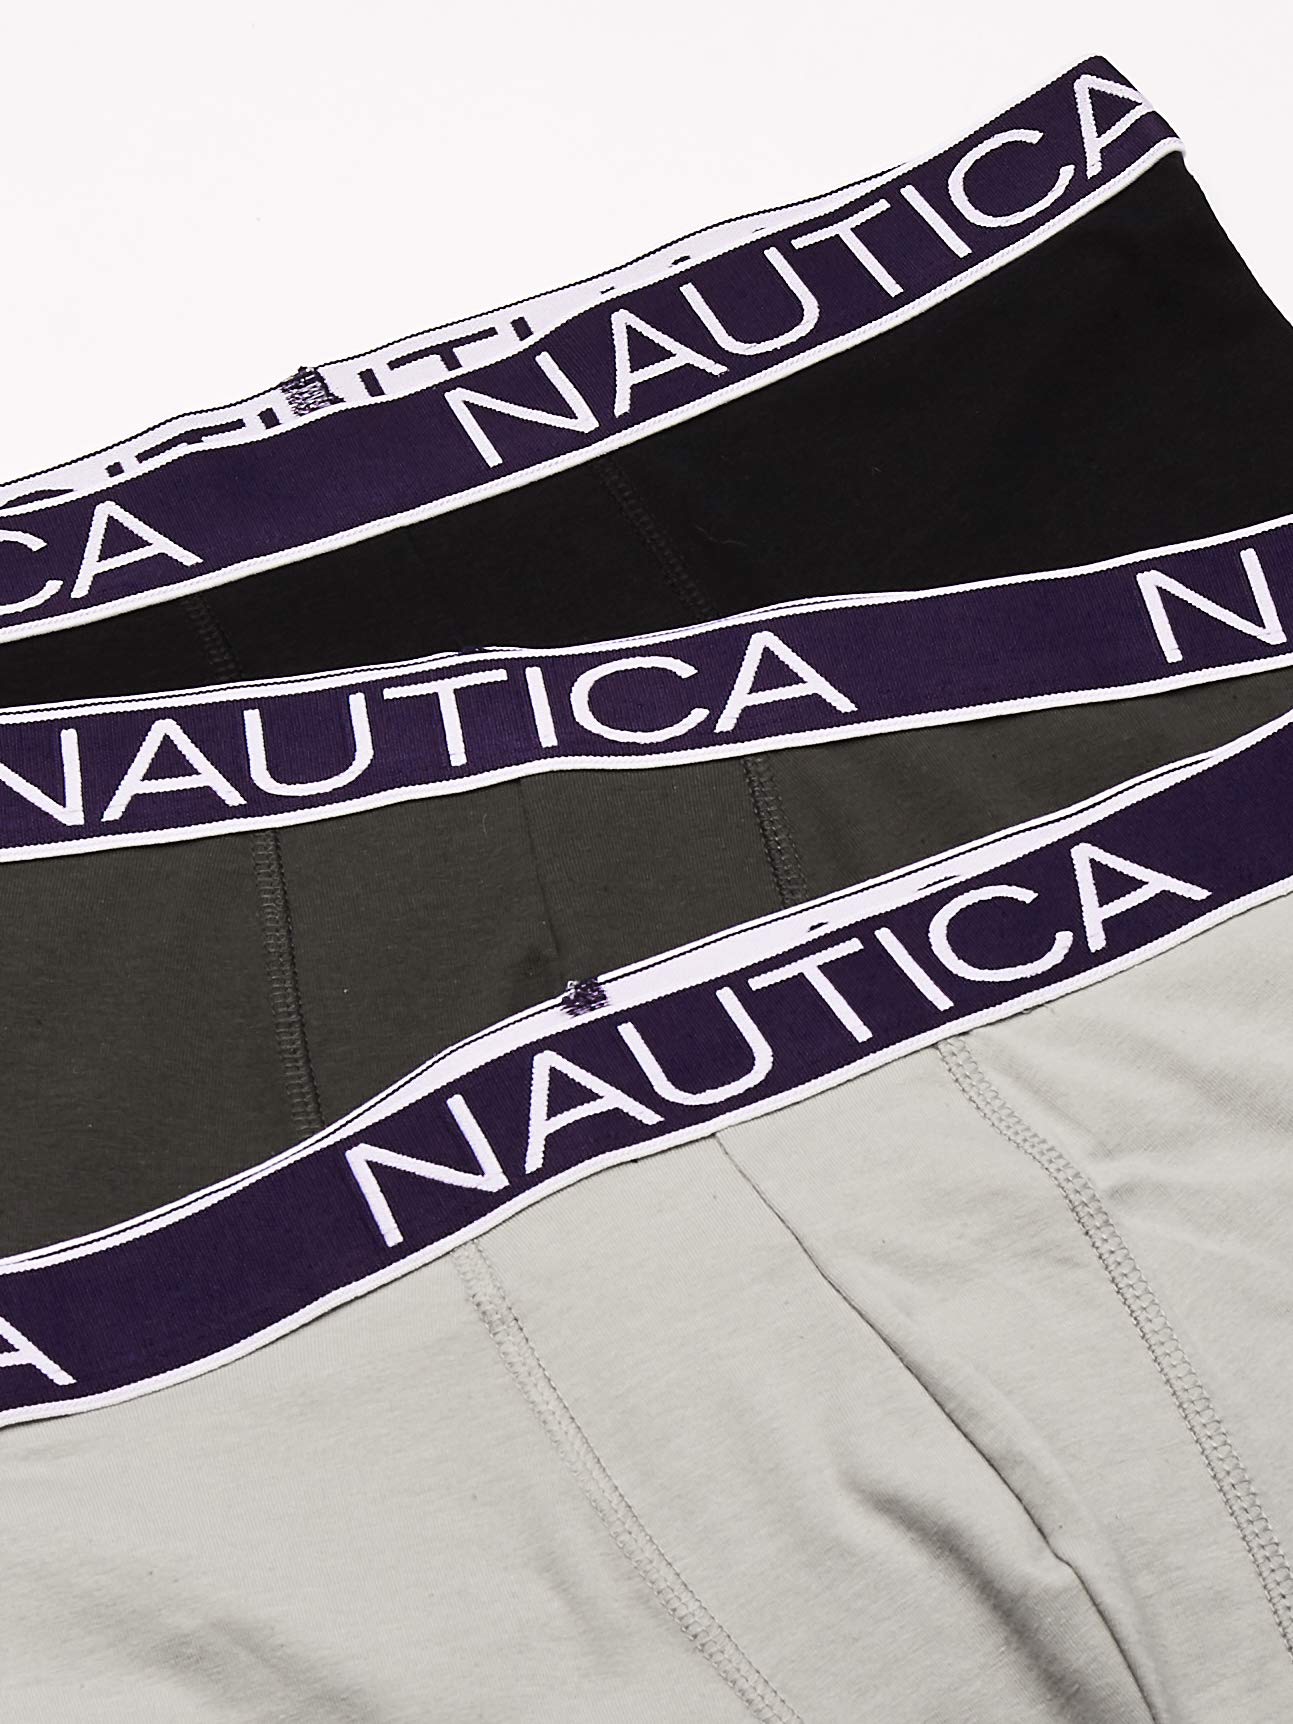 Nautica Men's 3-Pack Classic Underwear Cotton Stretch Boxer Brief